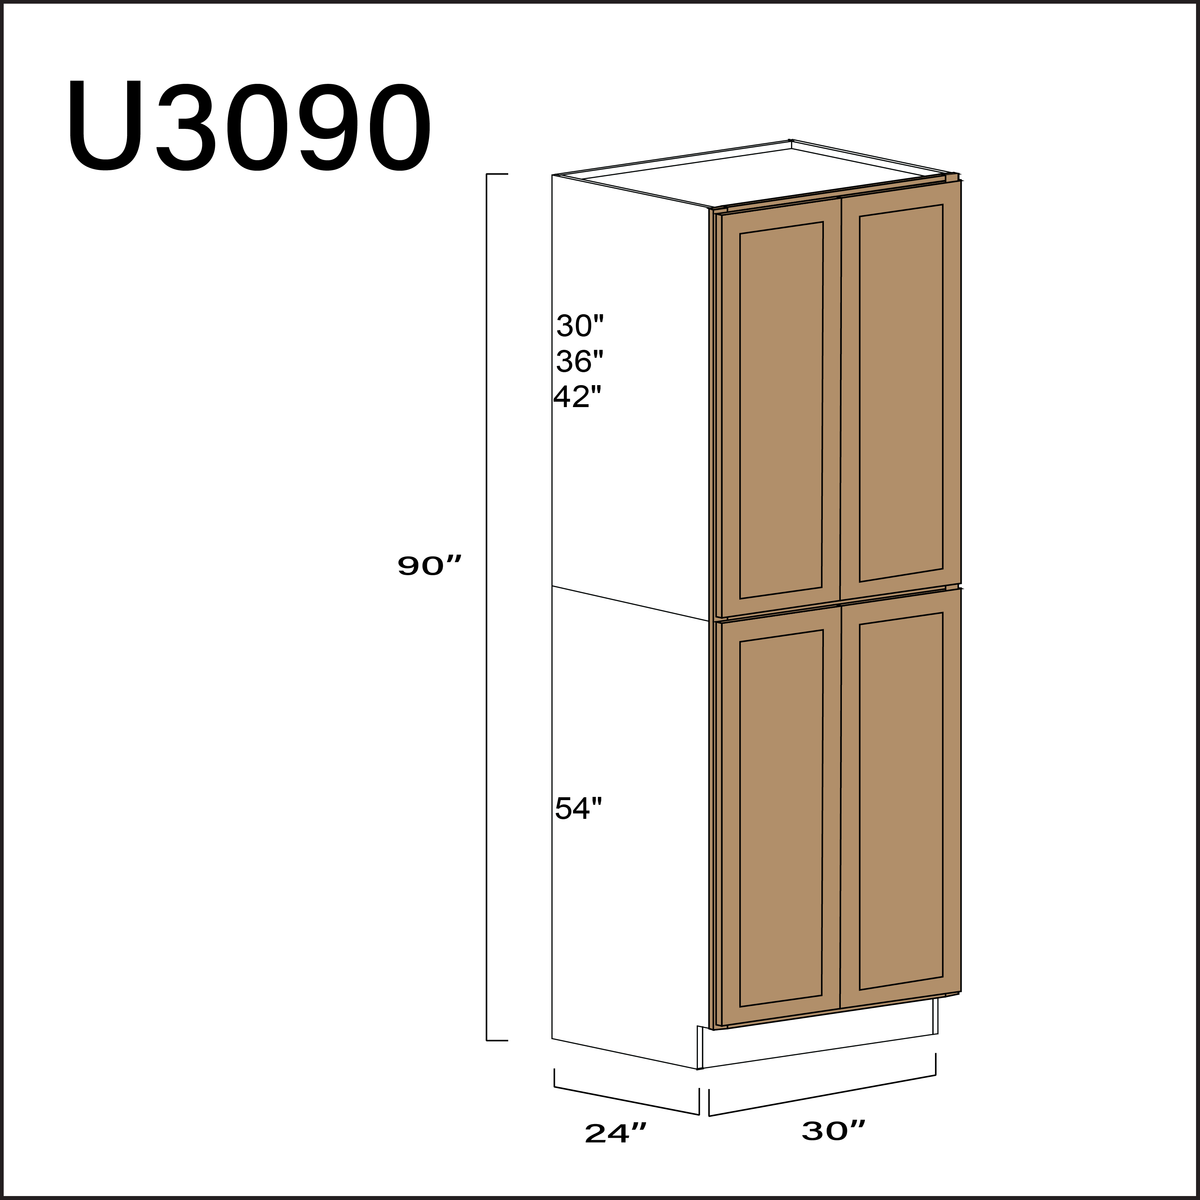 Alton Iced Mocha Double Door Pantry Cabinet - 30" W x 90" H x 24" D